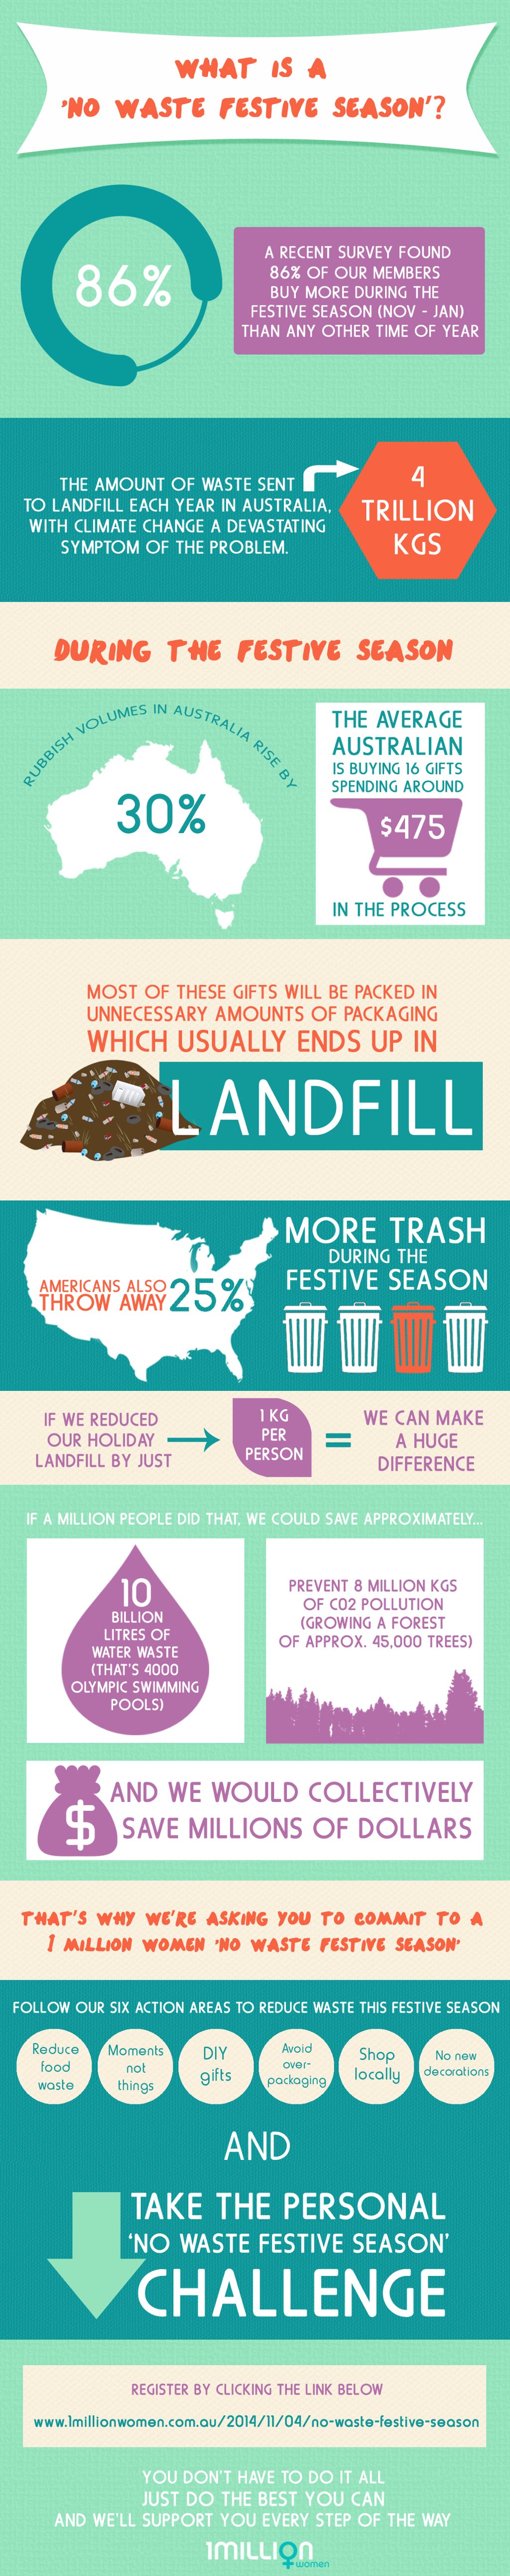 What is a No Waste Festive Season?